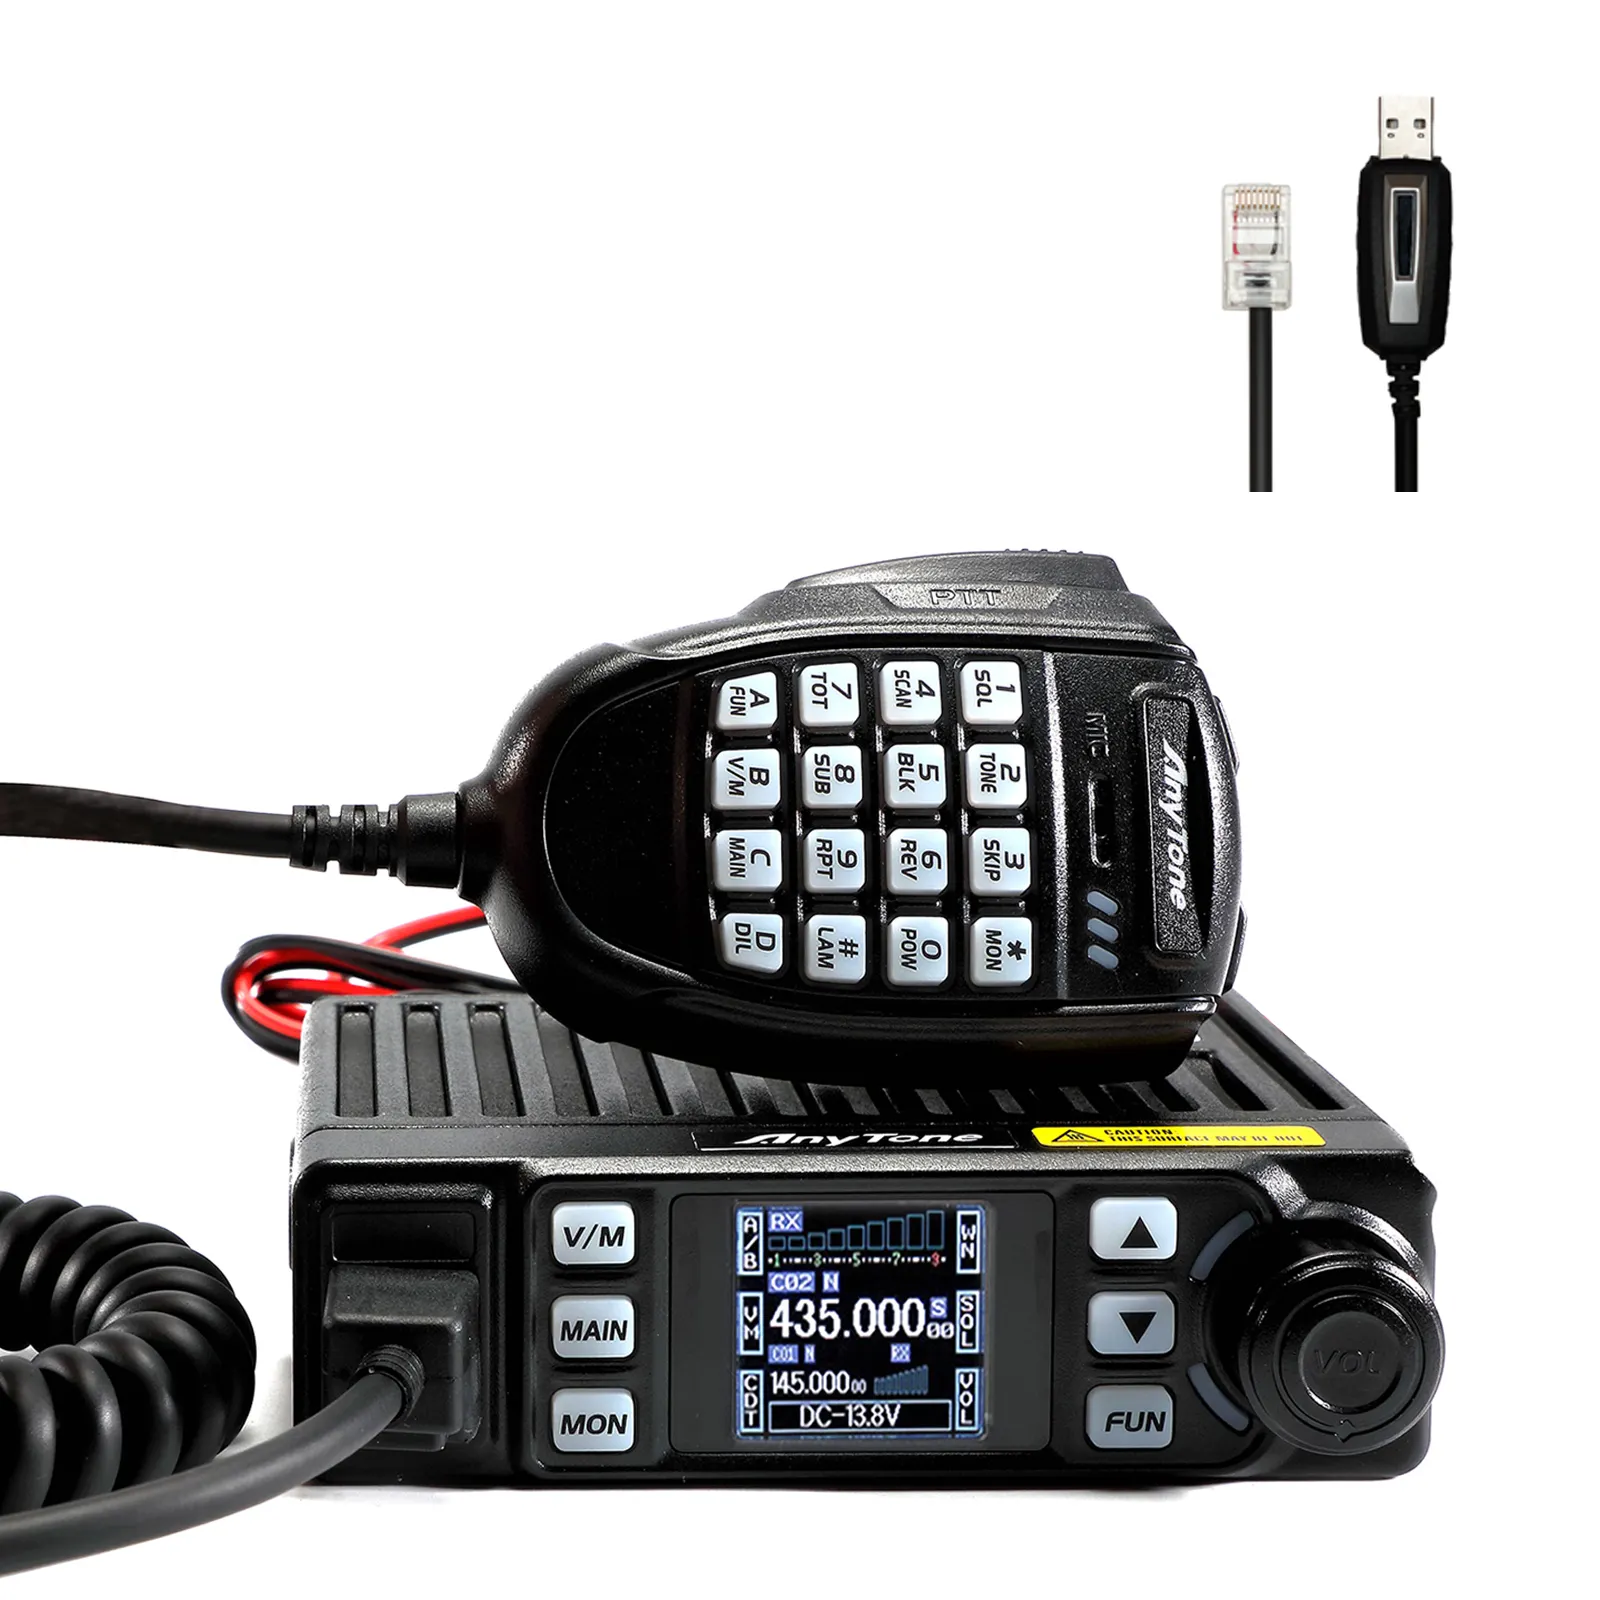 AnyTone मोबाइल शौकिया ट्रांसीवर AT-779UV 20-वाट दोहरी बैंड VHF/UHF मोबाइल रेडियो लंबी दूरी मिनी स्कैनिंग रिसीवर w/नि: शुल्क Cabl